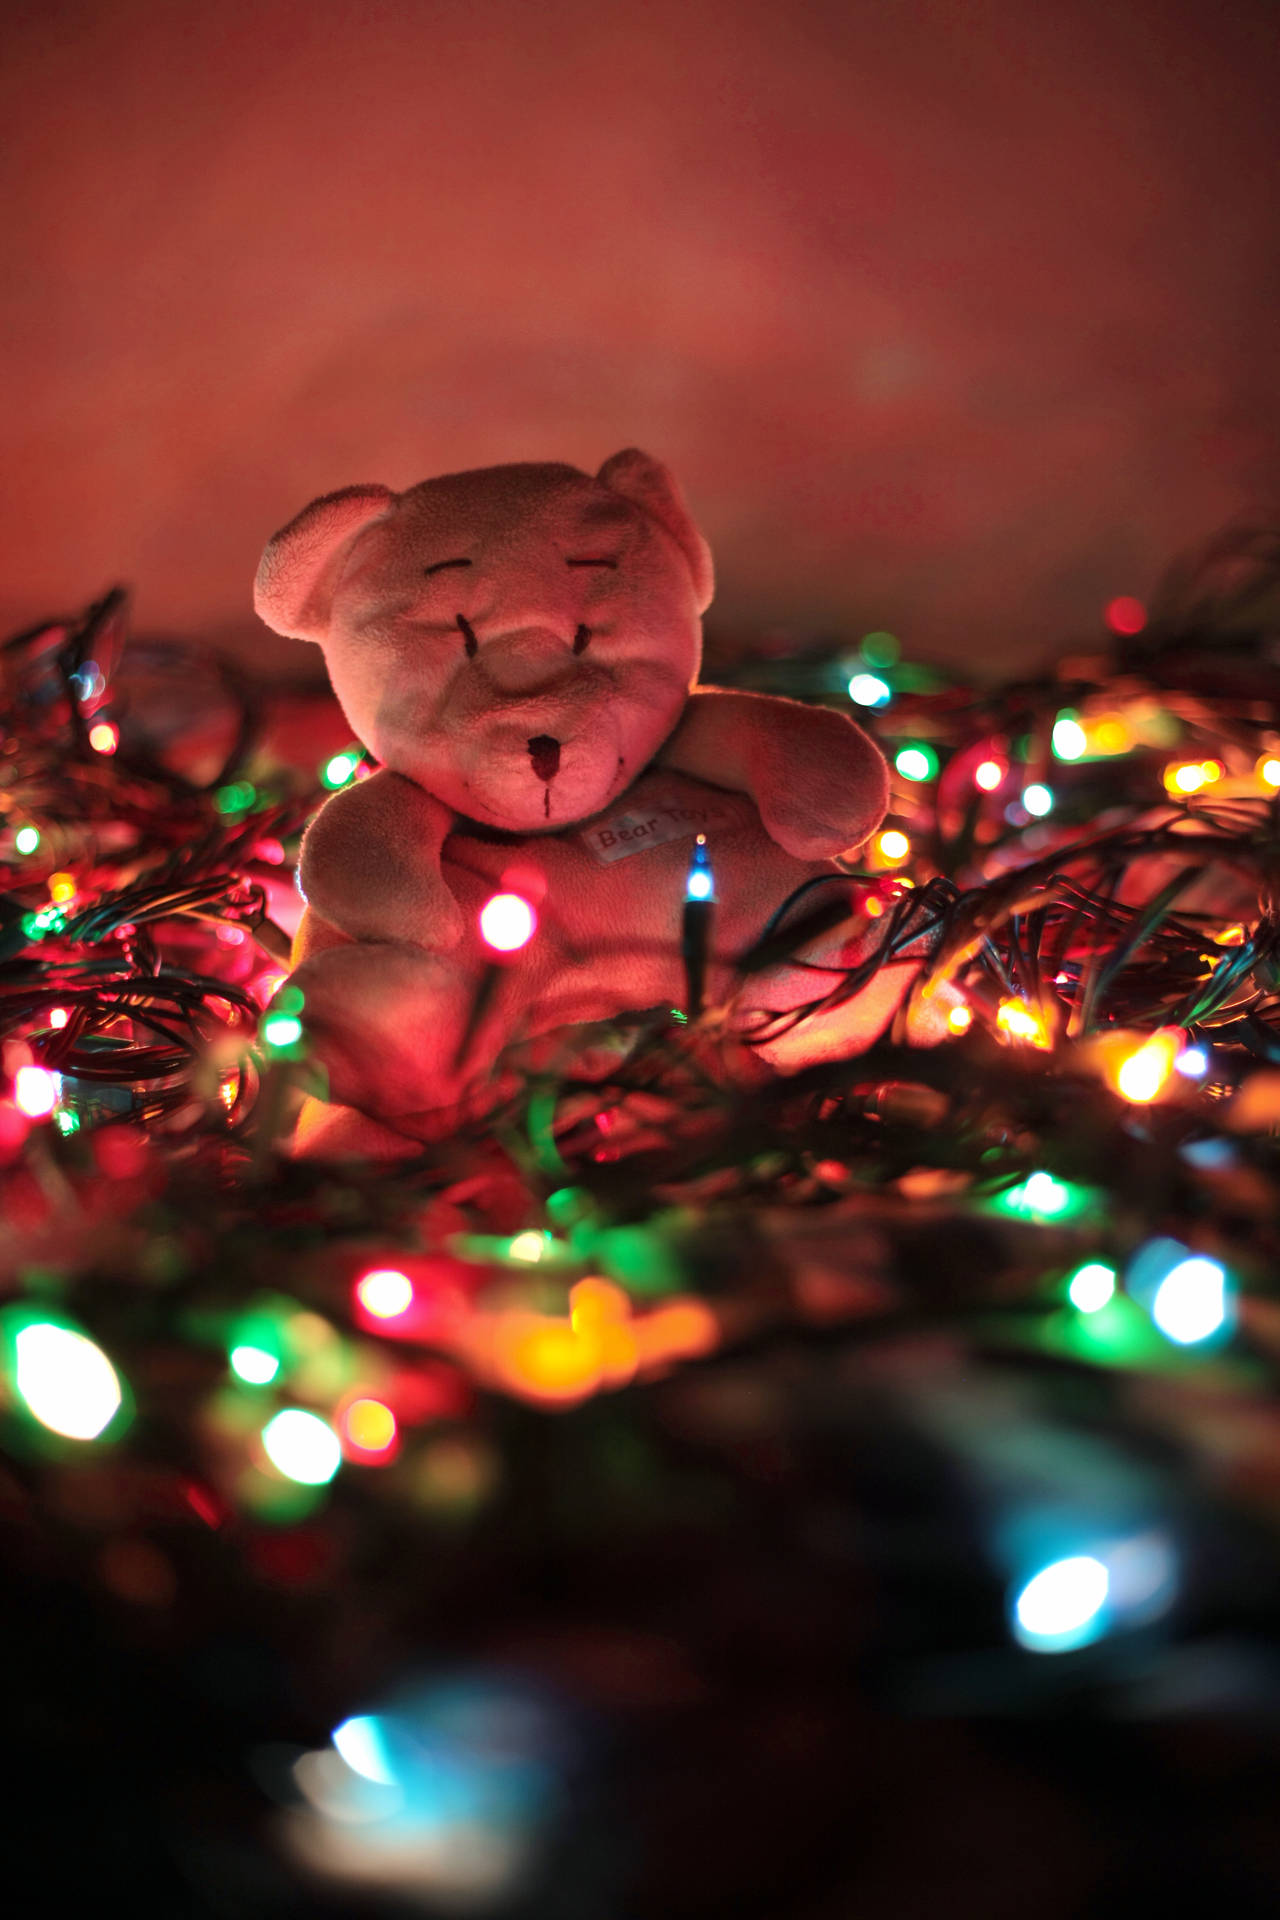 Cute Teddy Bear With Lights Wallpaper